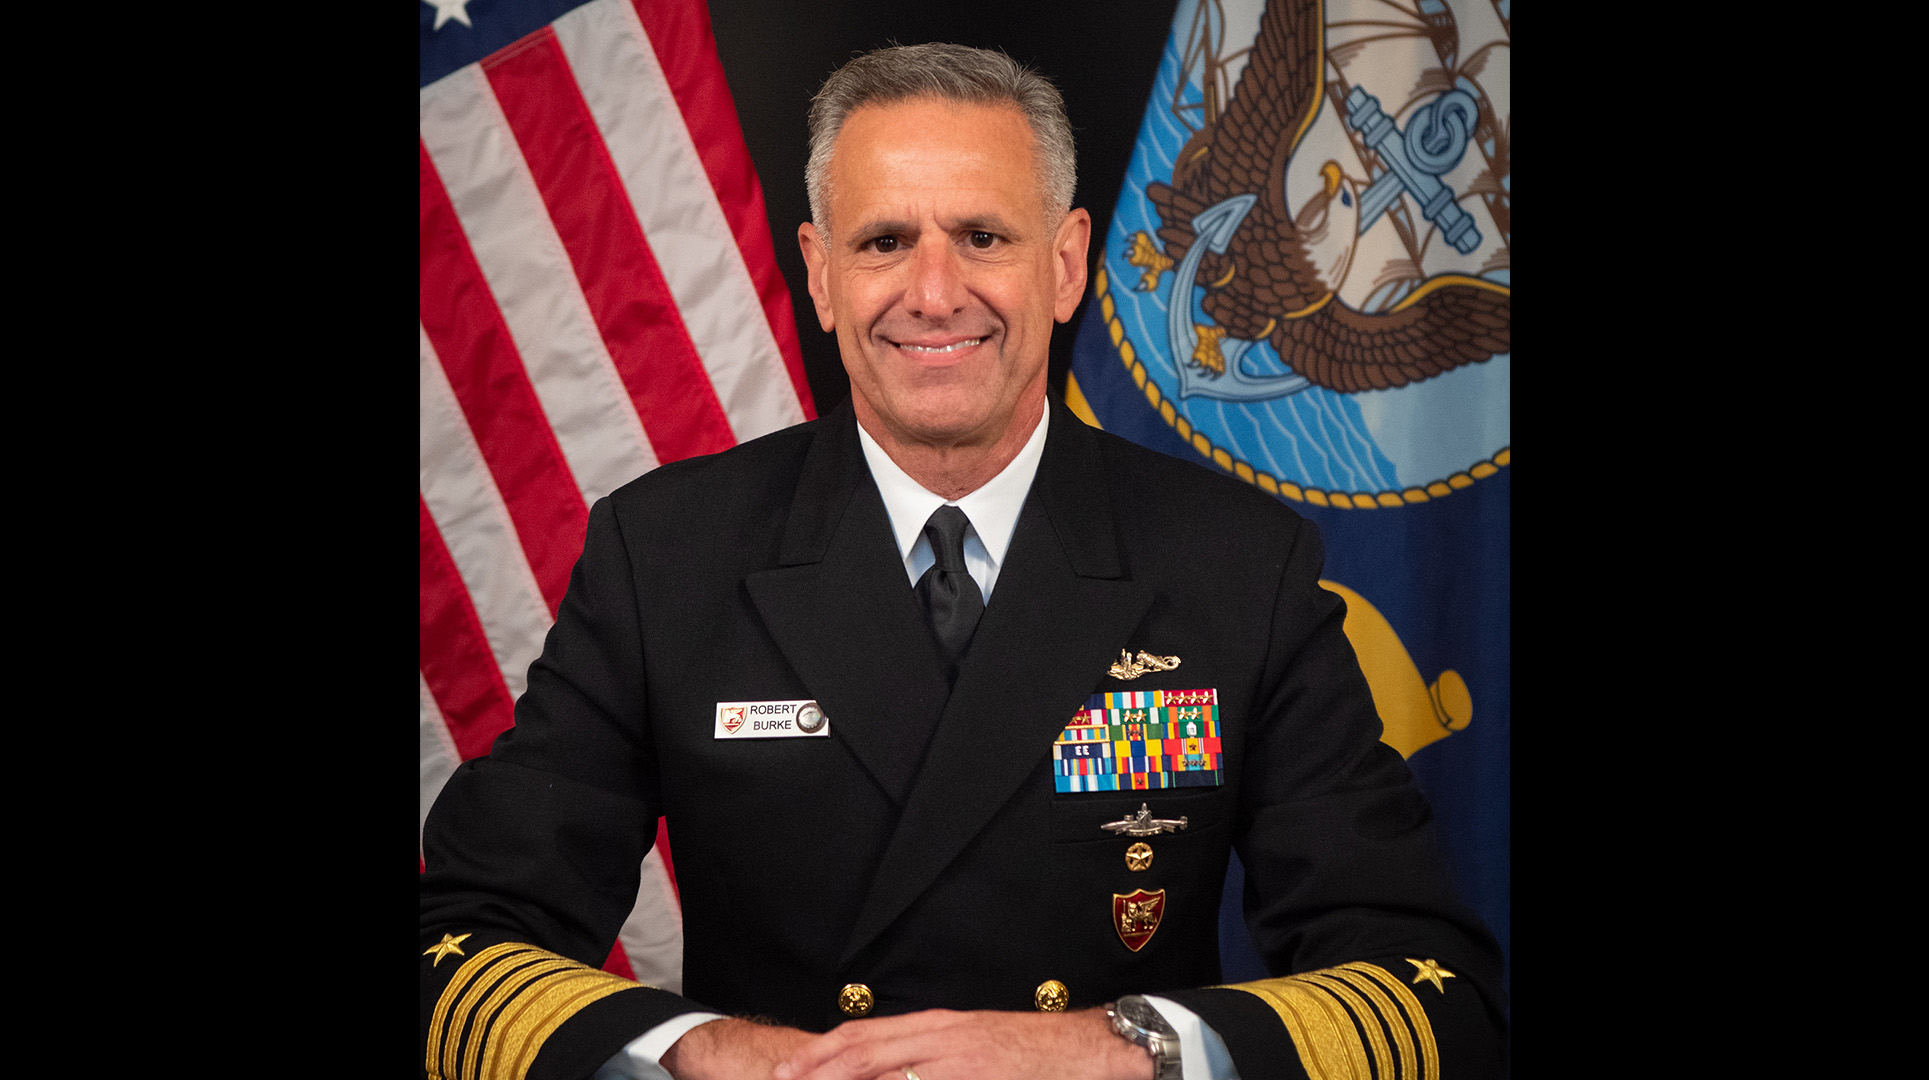 Former Admiral’s $500,000 retirement job was a bribe, prosecutors say